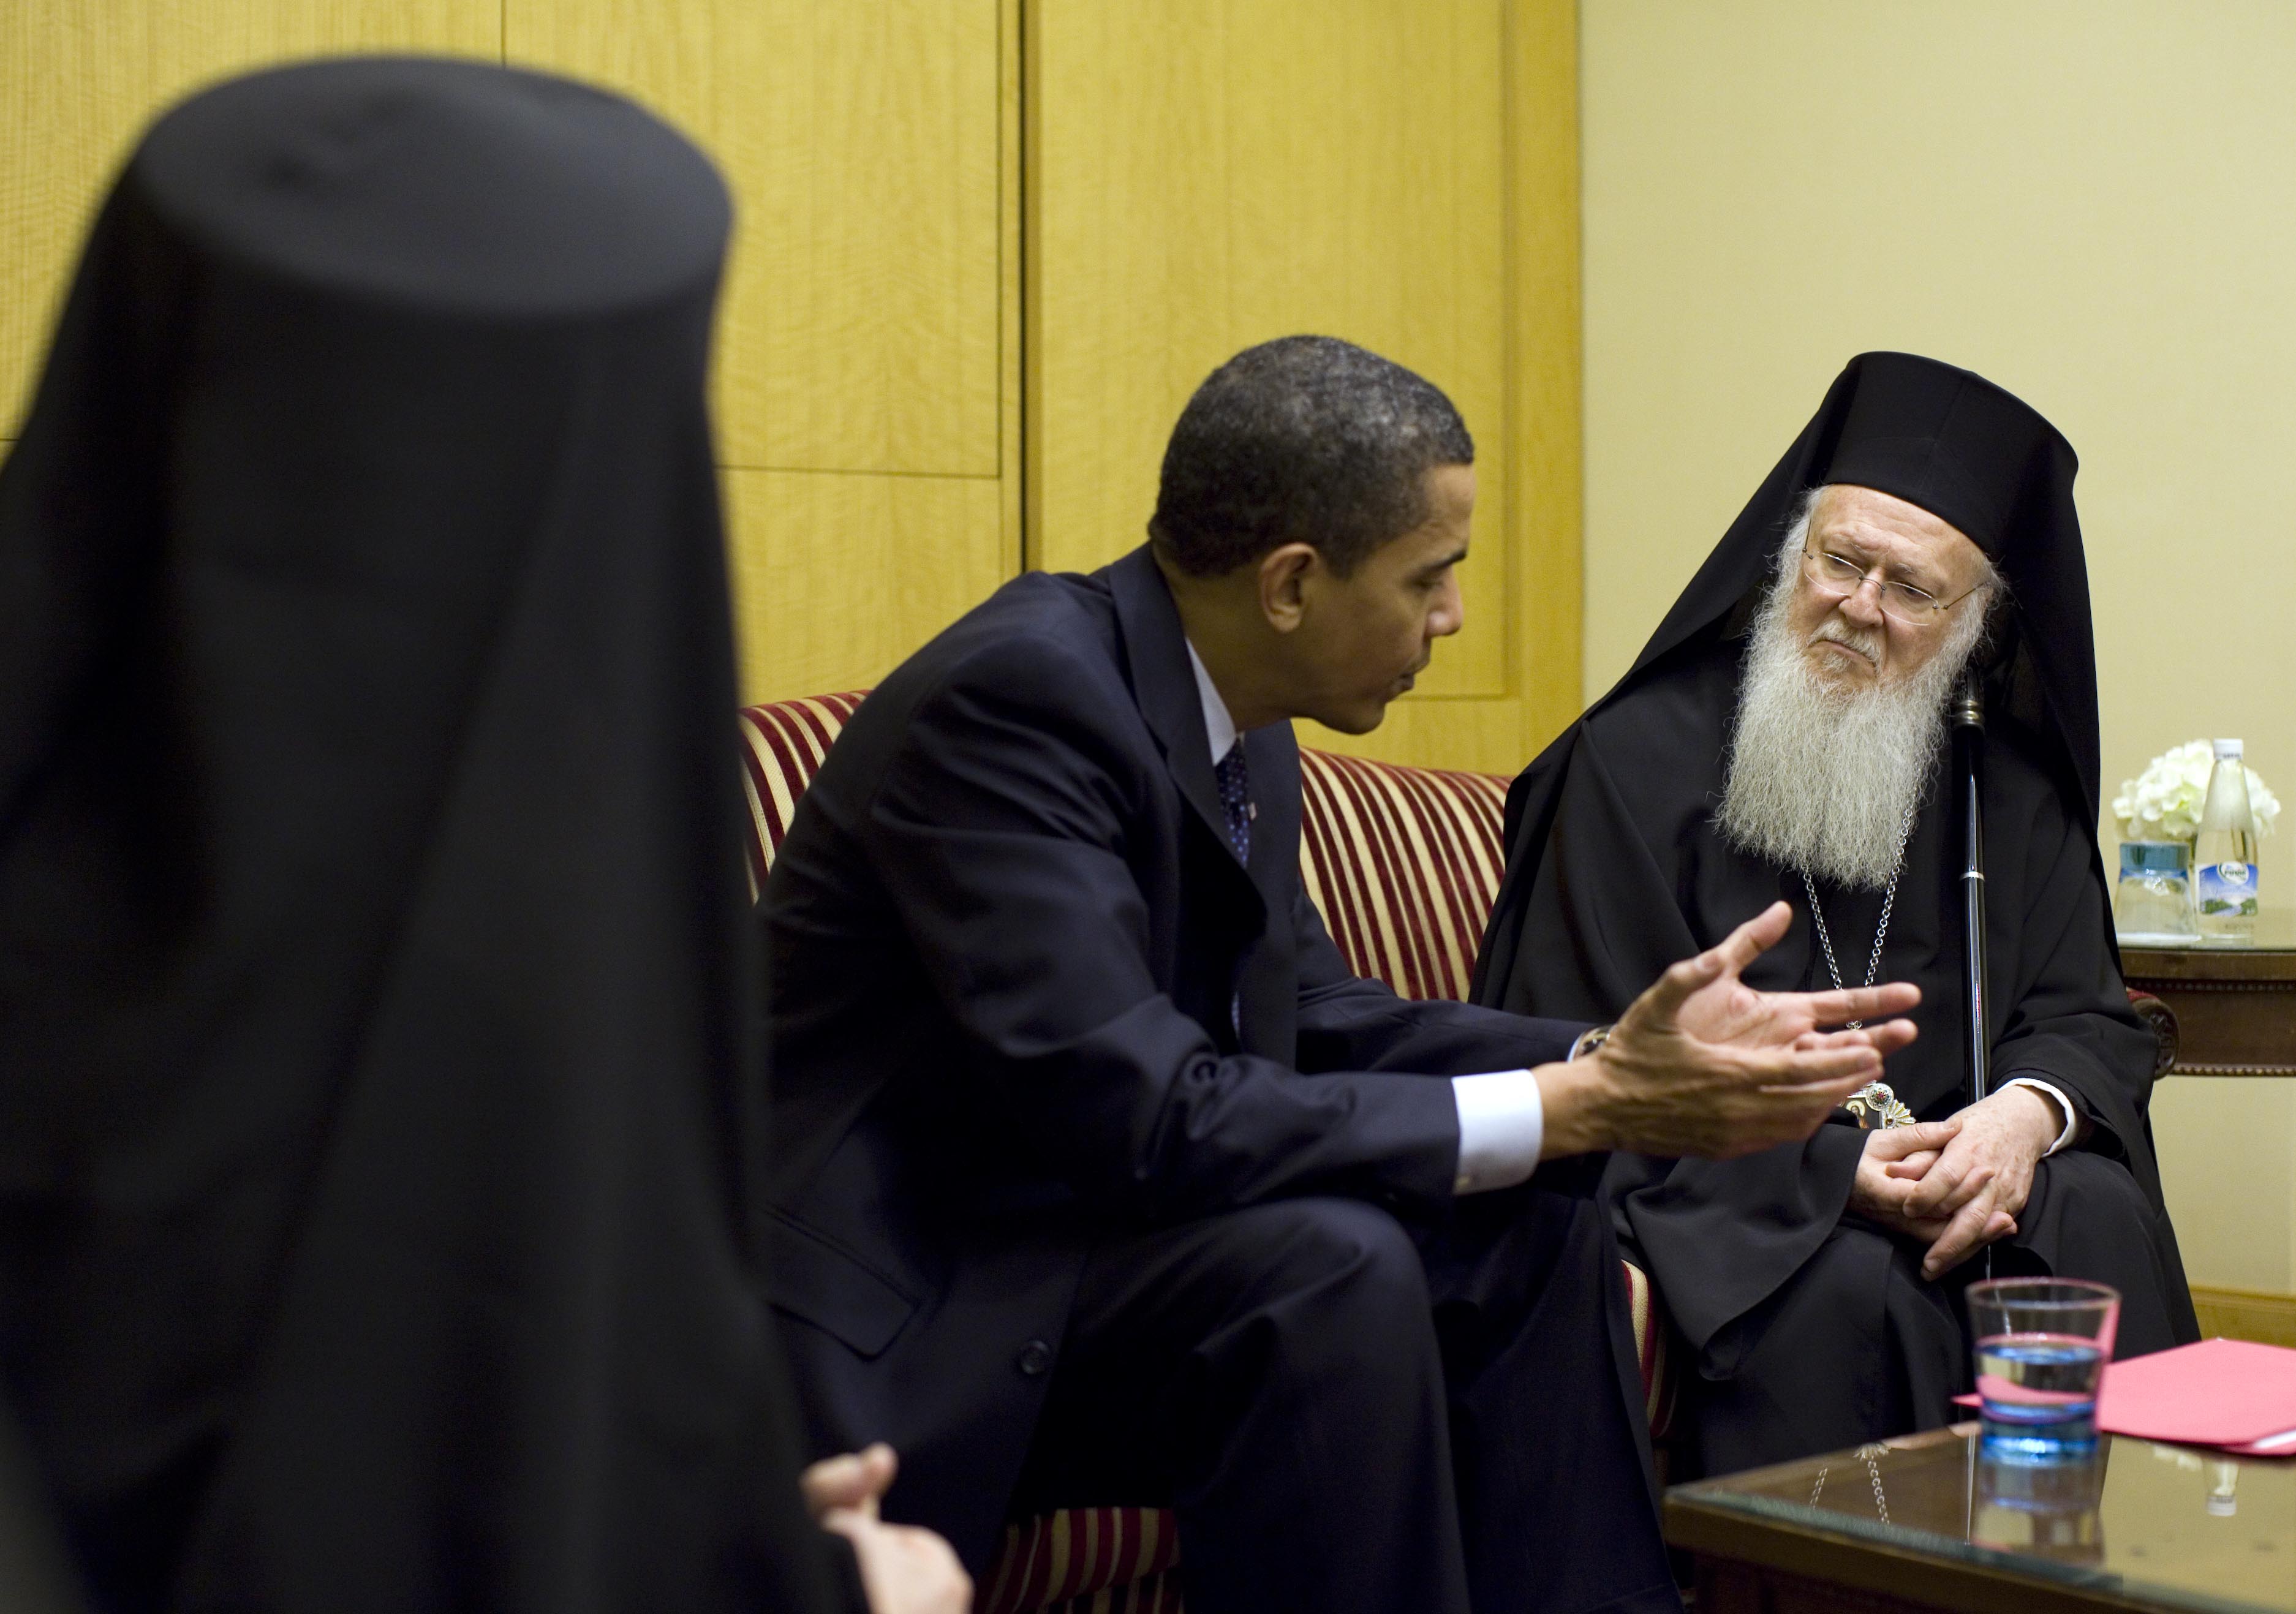 Barack Obama meets with Ecumenical Patriarch Bartholomew I in Istanbul 4-7-09